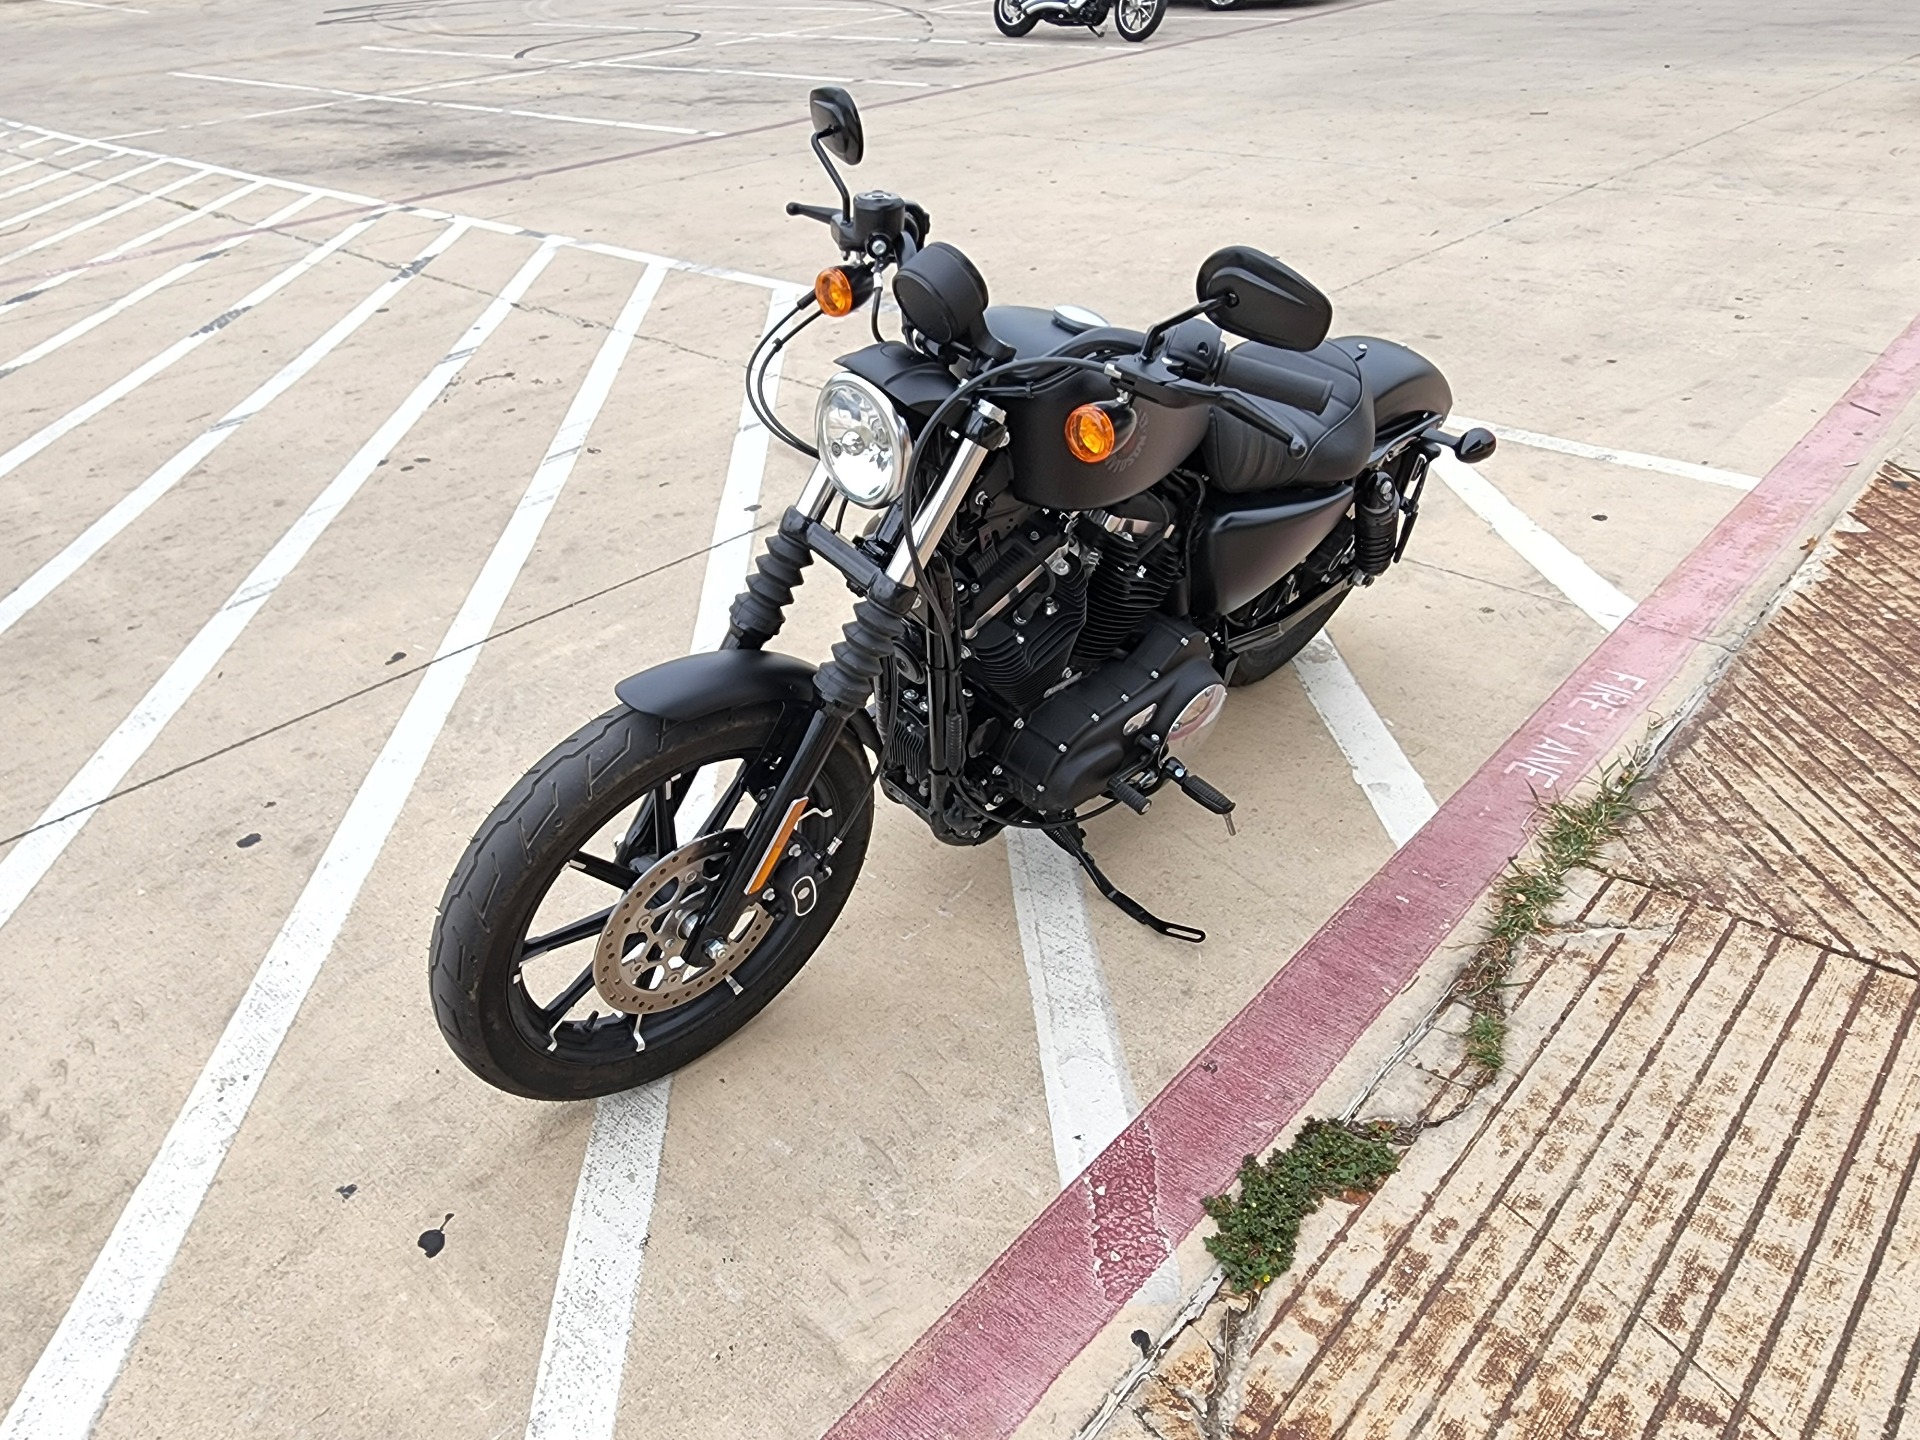 2022 Harley-Davidson Iron 883™ in San Antonio, Texas - Photo 4